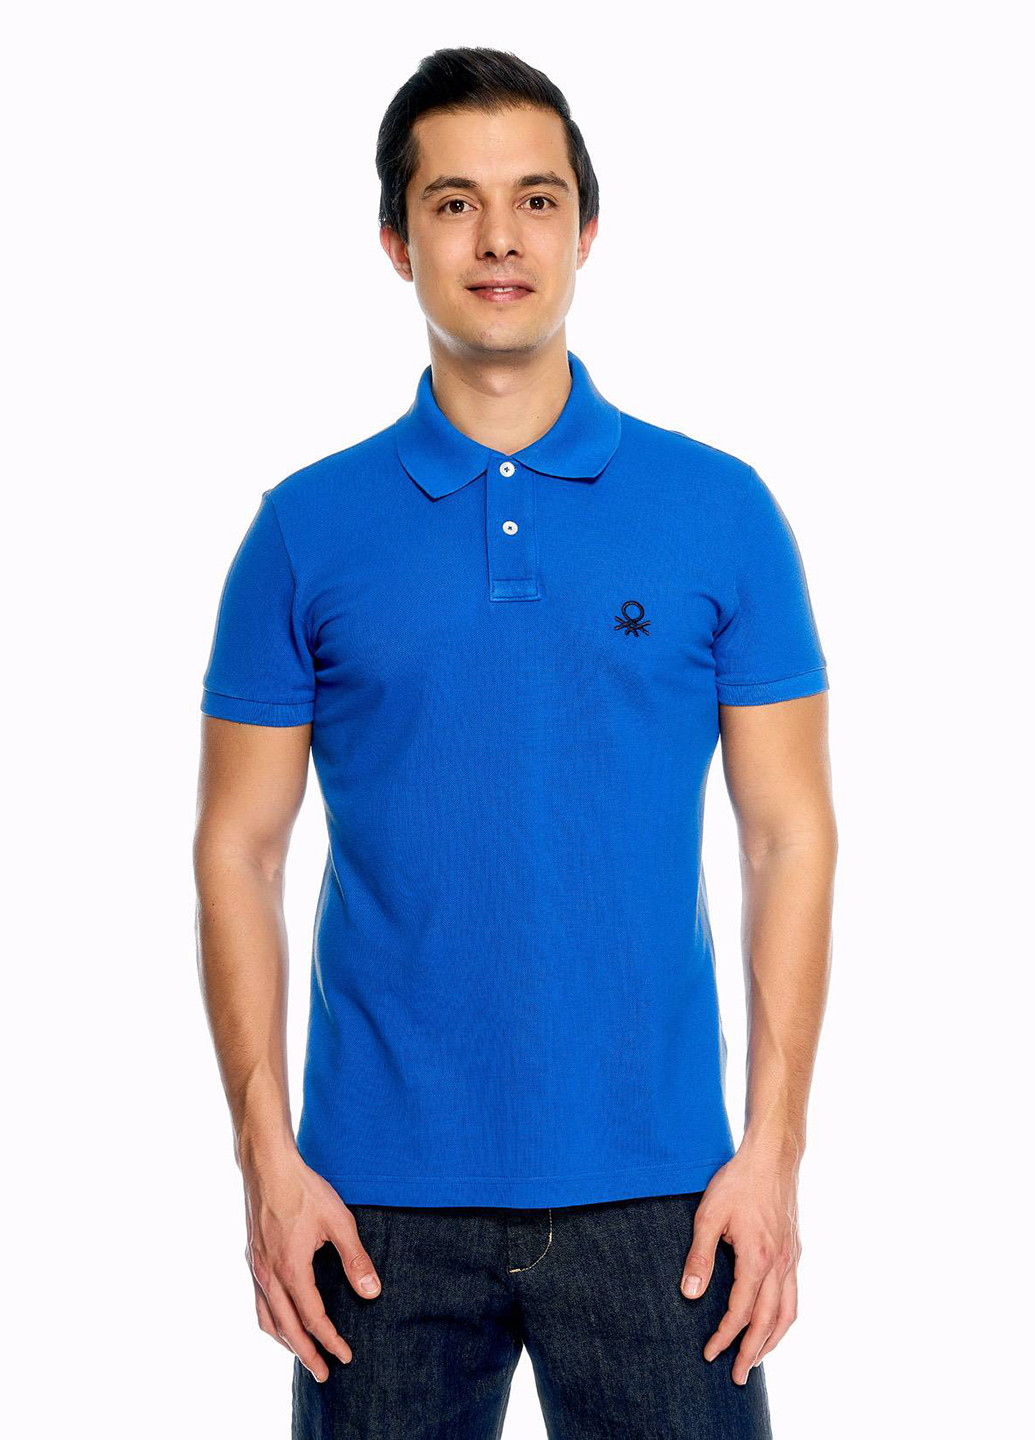 Темно-голубой футболка-поло для мужчин United Colors of Benetton однотонная